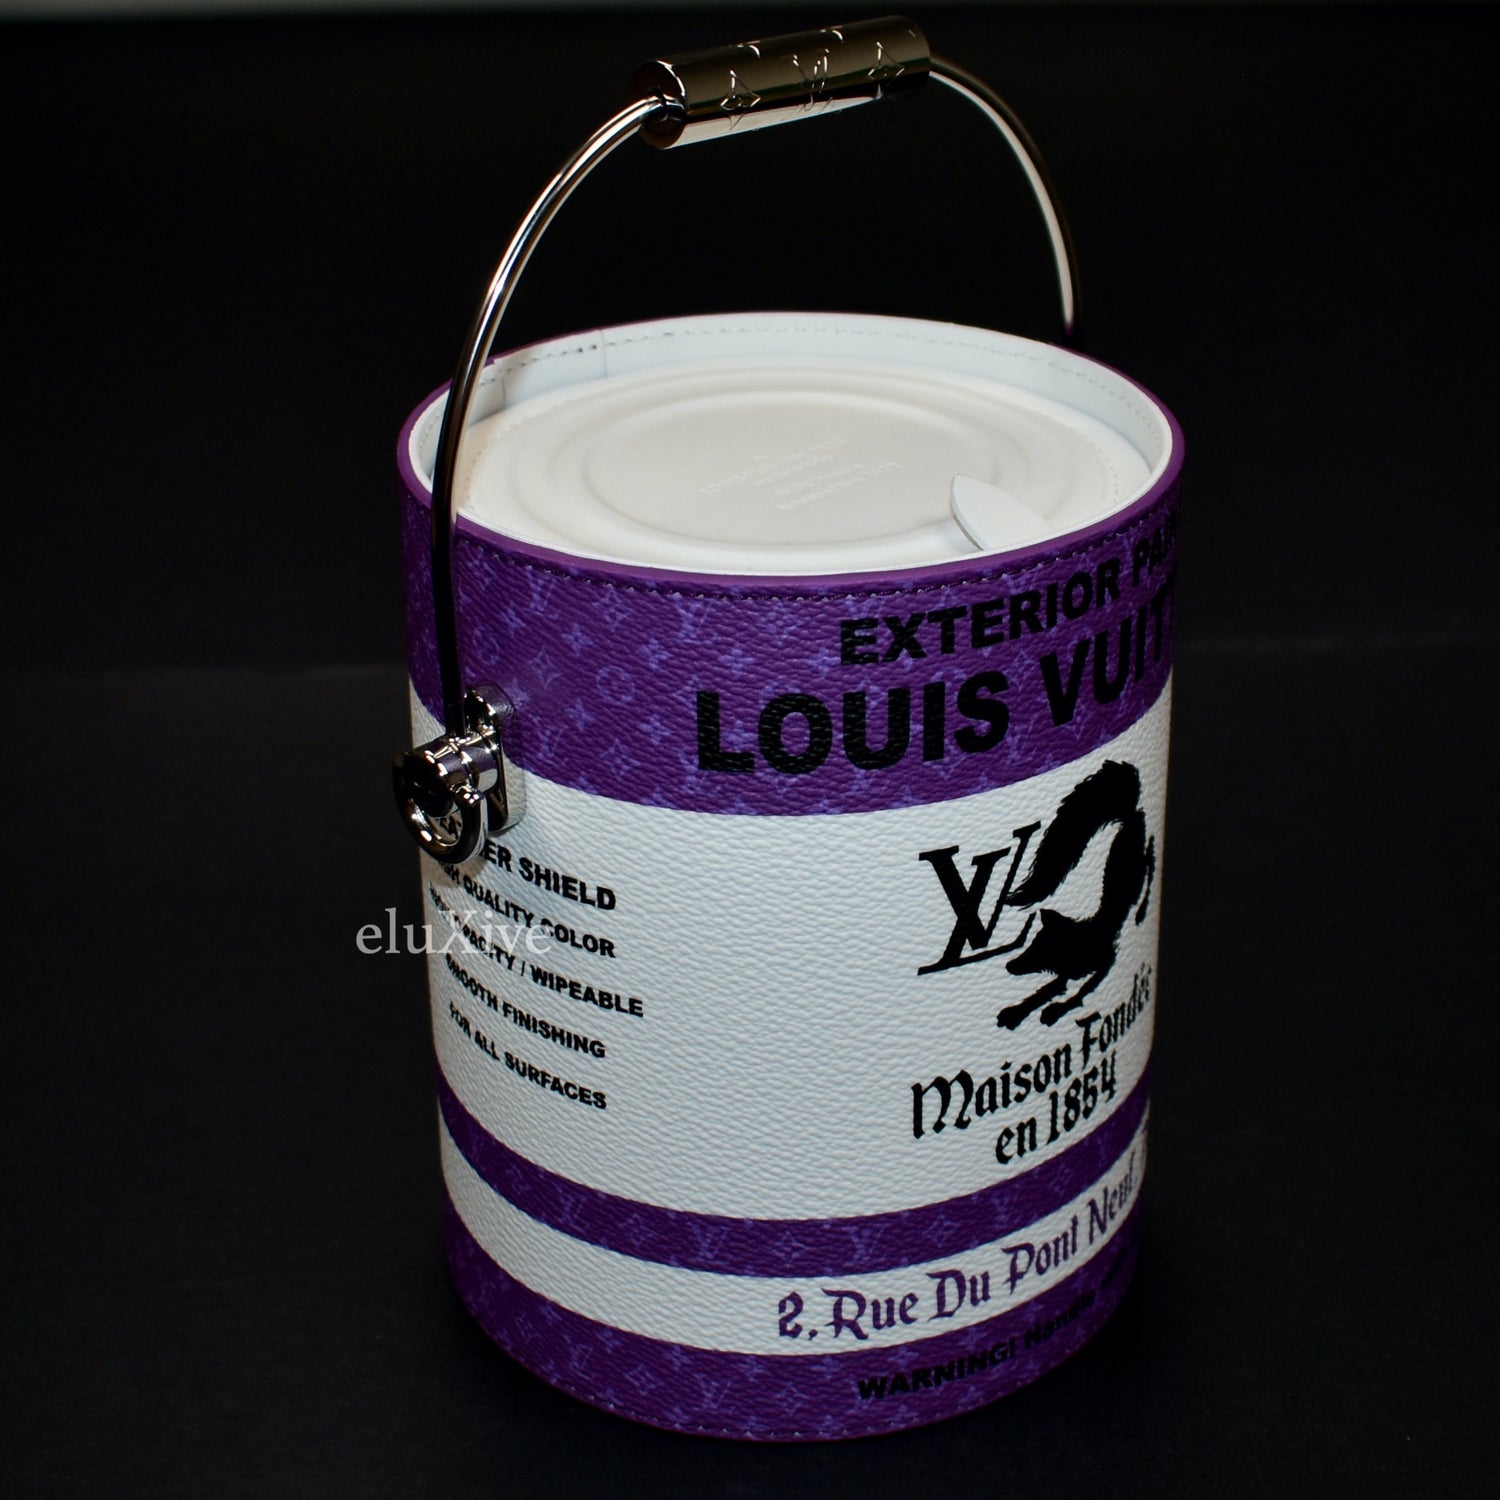 Handbag Louis Vuitton Purple in Water snake - 25082173